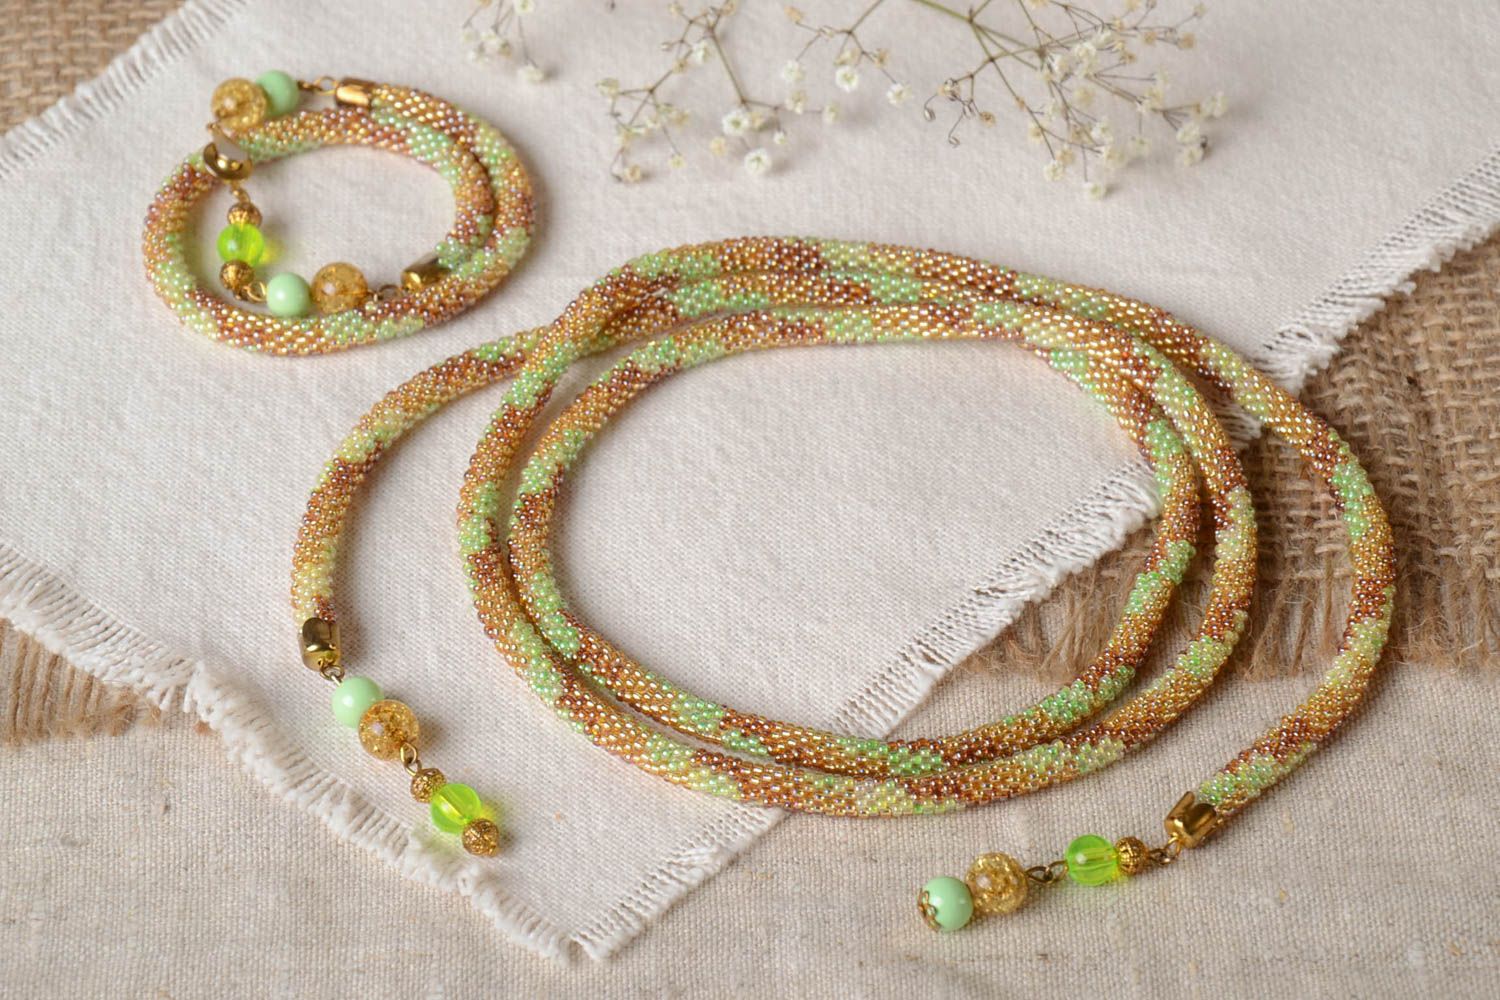 Gentle handmade beaded cord necklace and bracelet designer jewelry for women photo 1